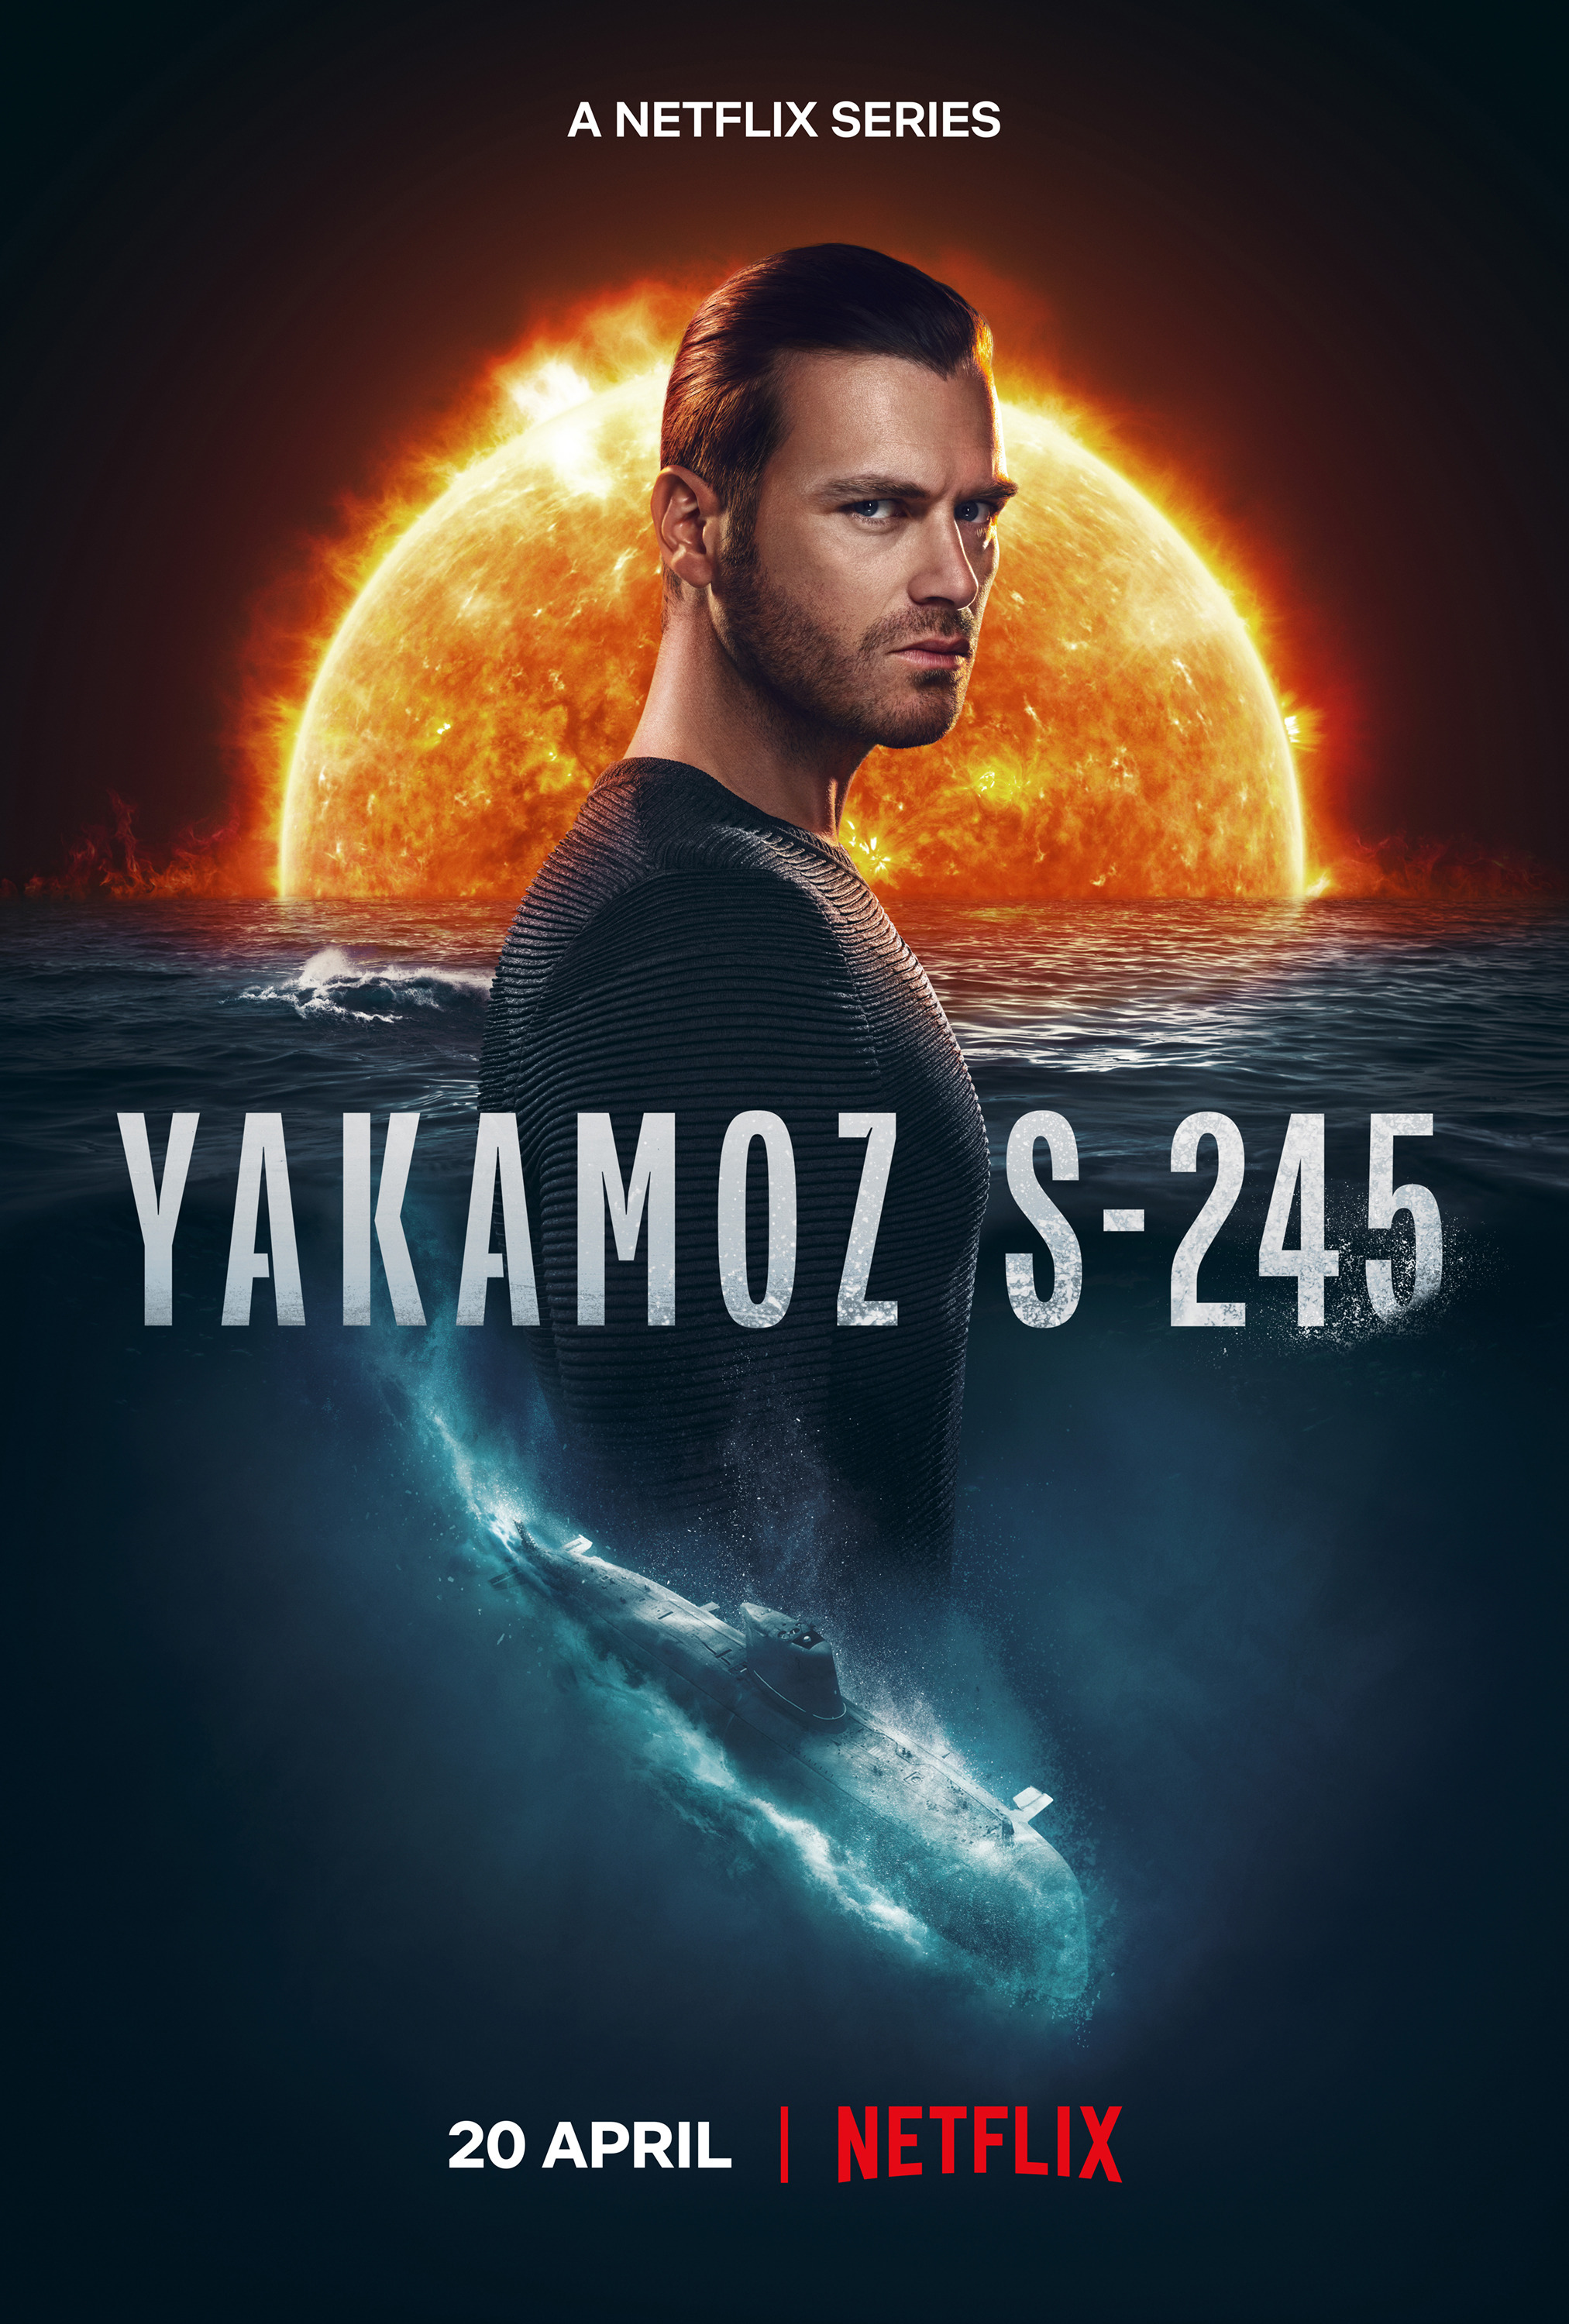 Mega Sized TV Poster Image for Yakamoz S-245 